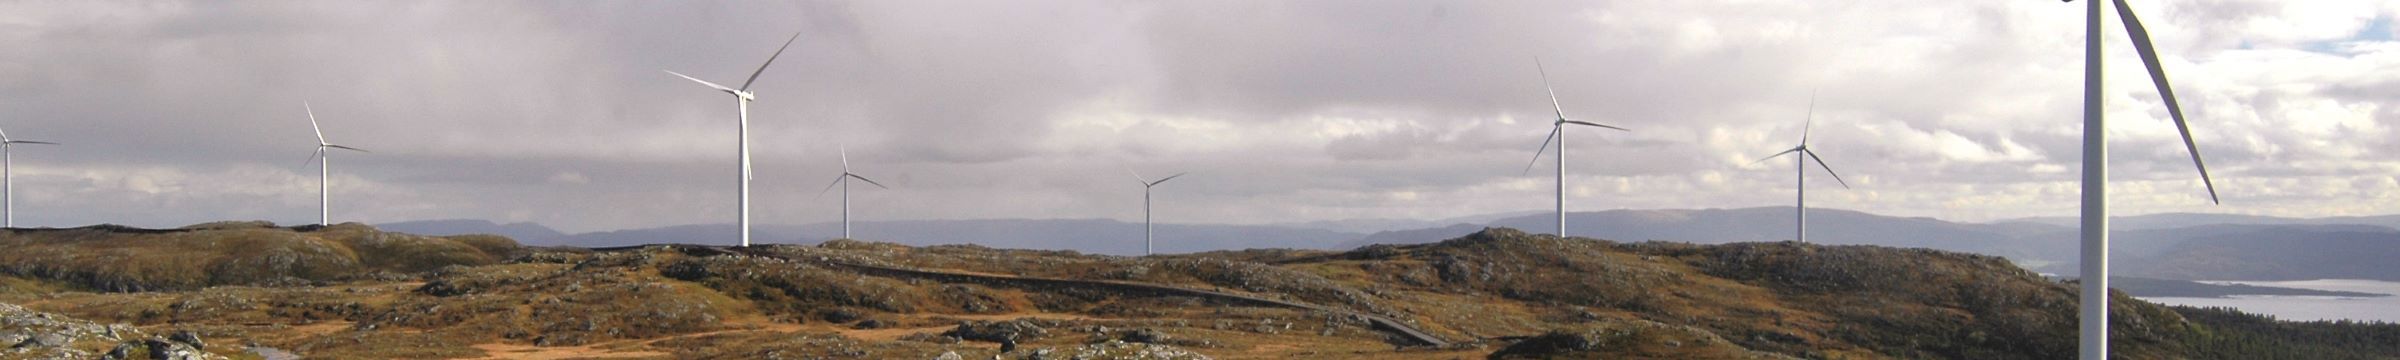 Wind turbines in a cloudy landscape